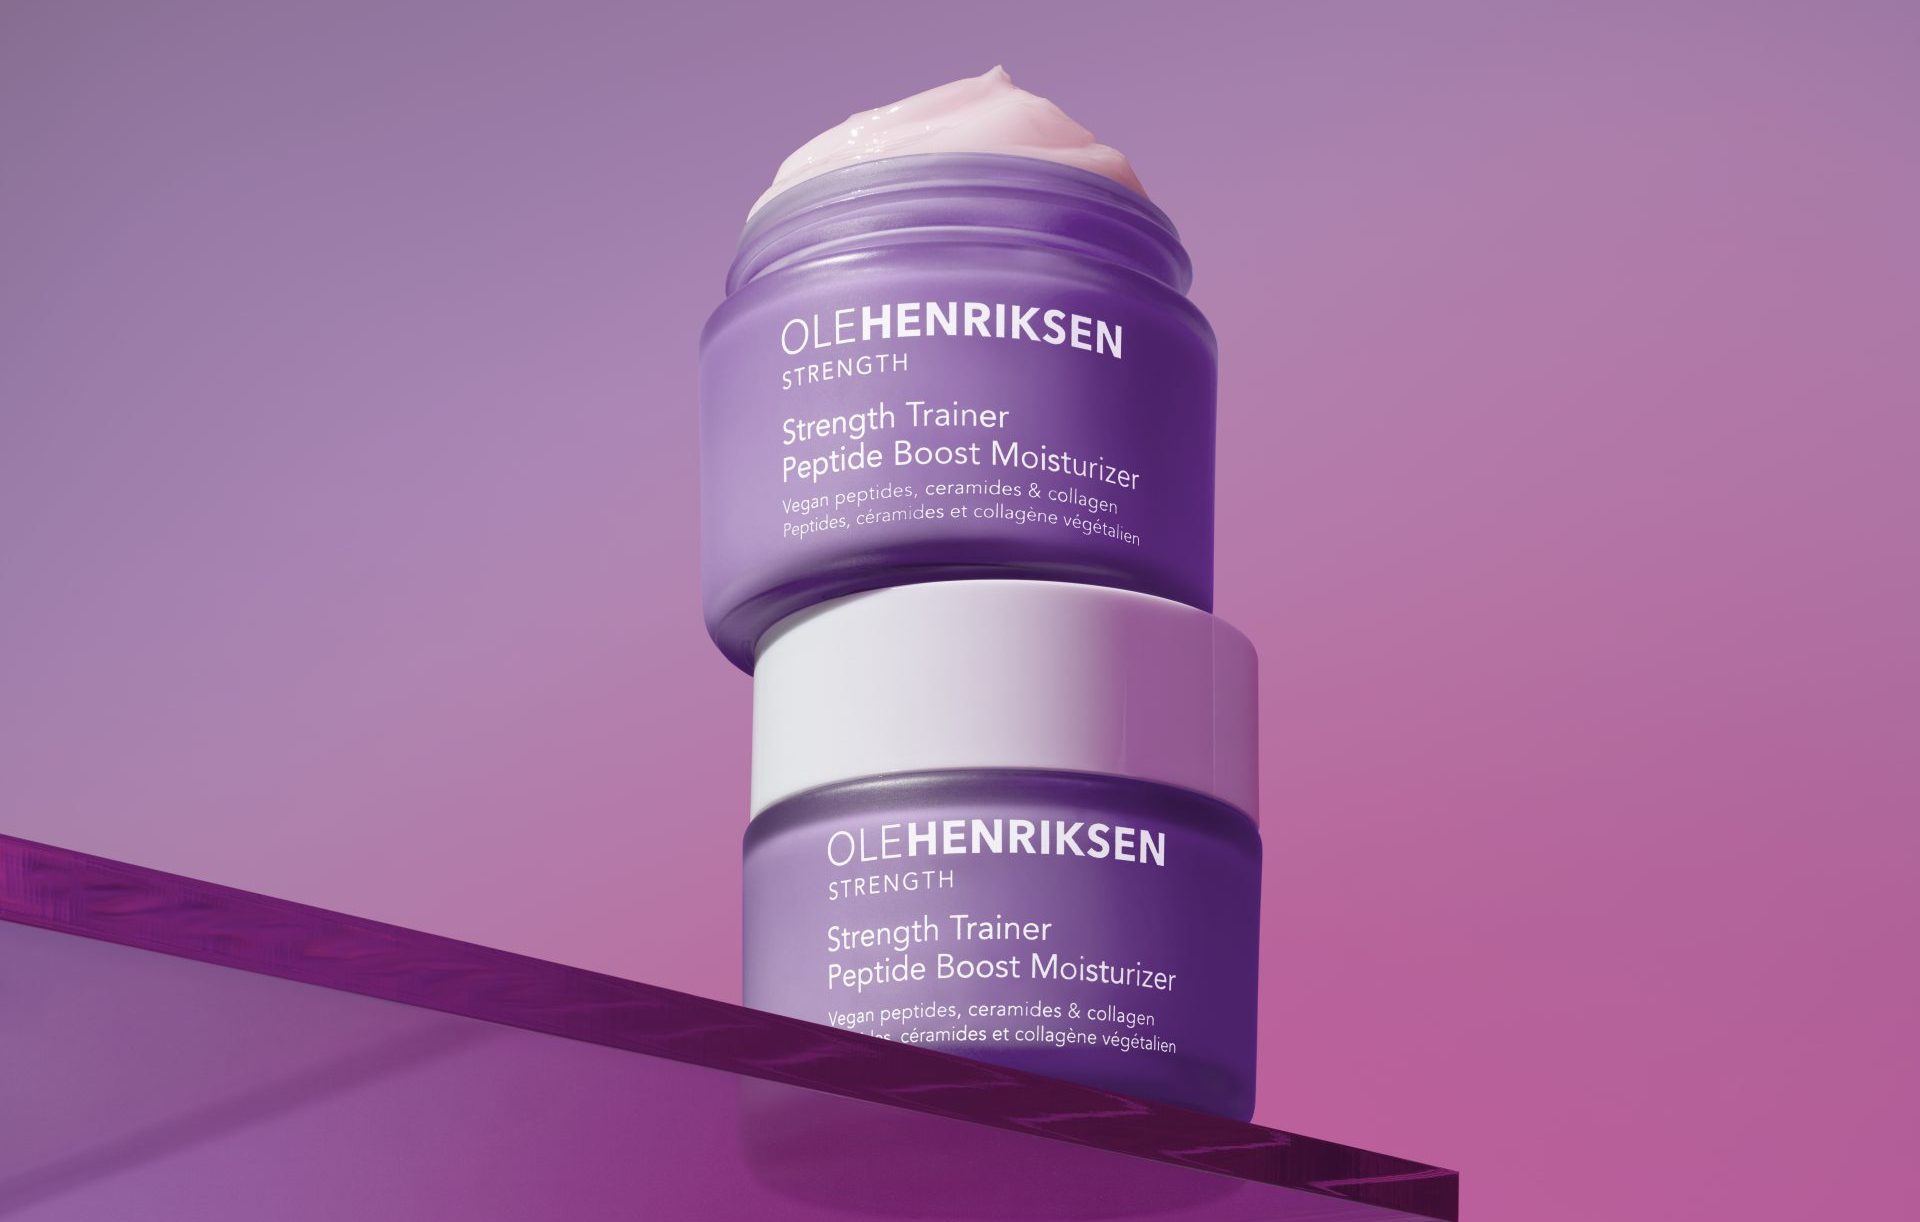 OleHenriksen Announces Brand Relaunch